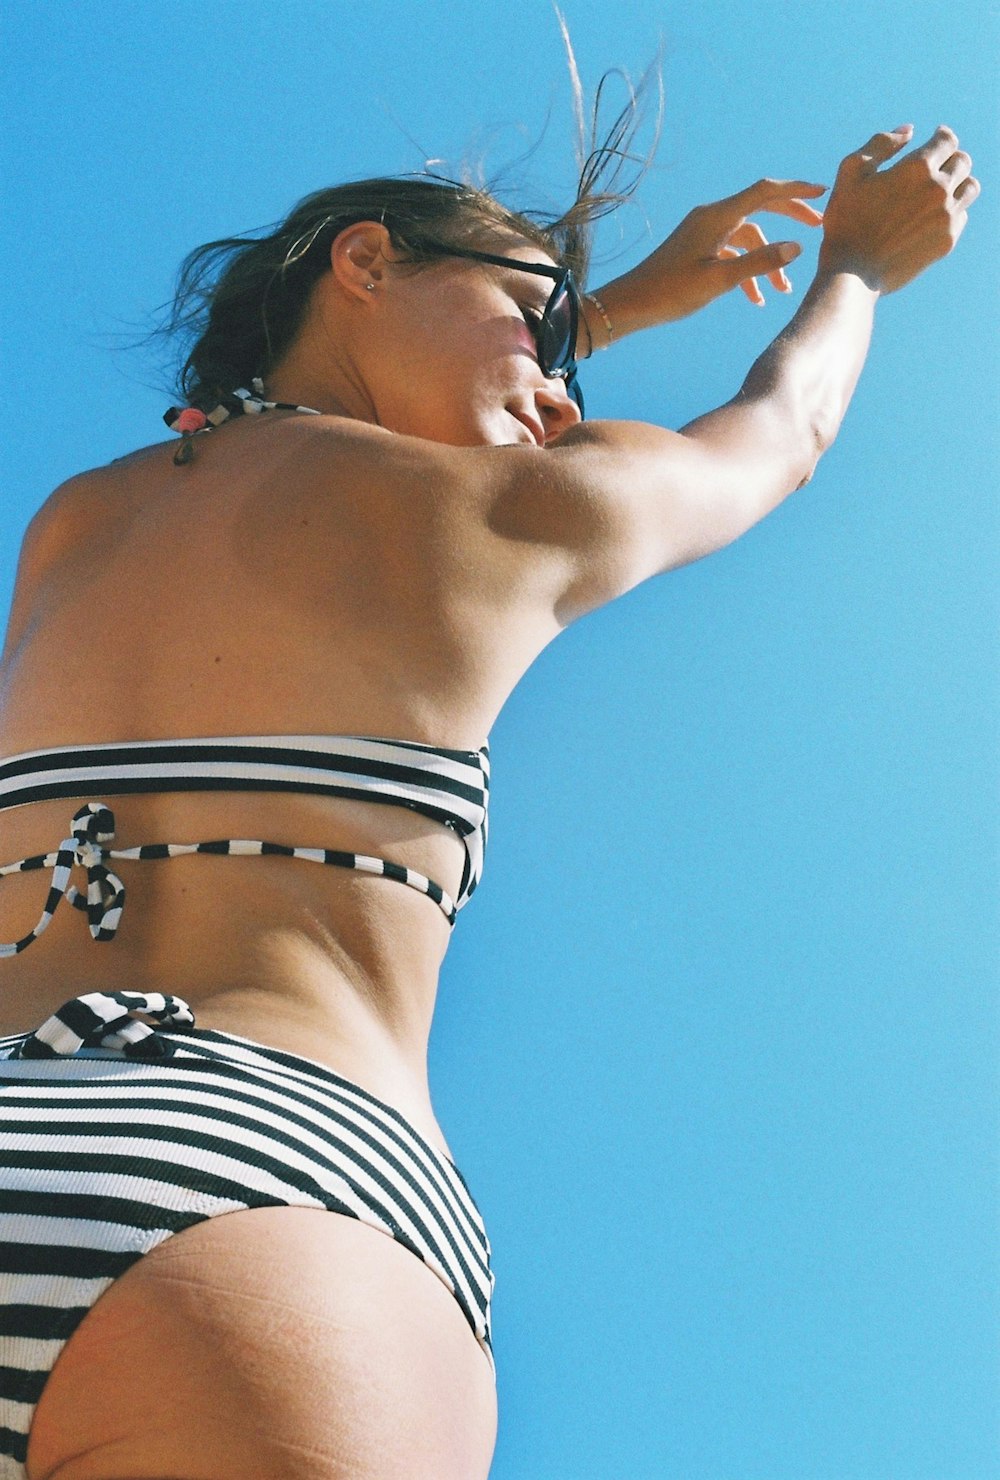 a woman in a striped bikini is flying a kite